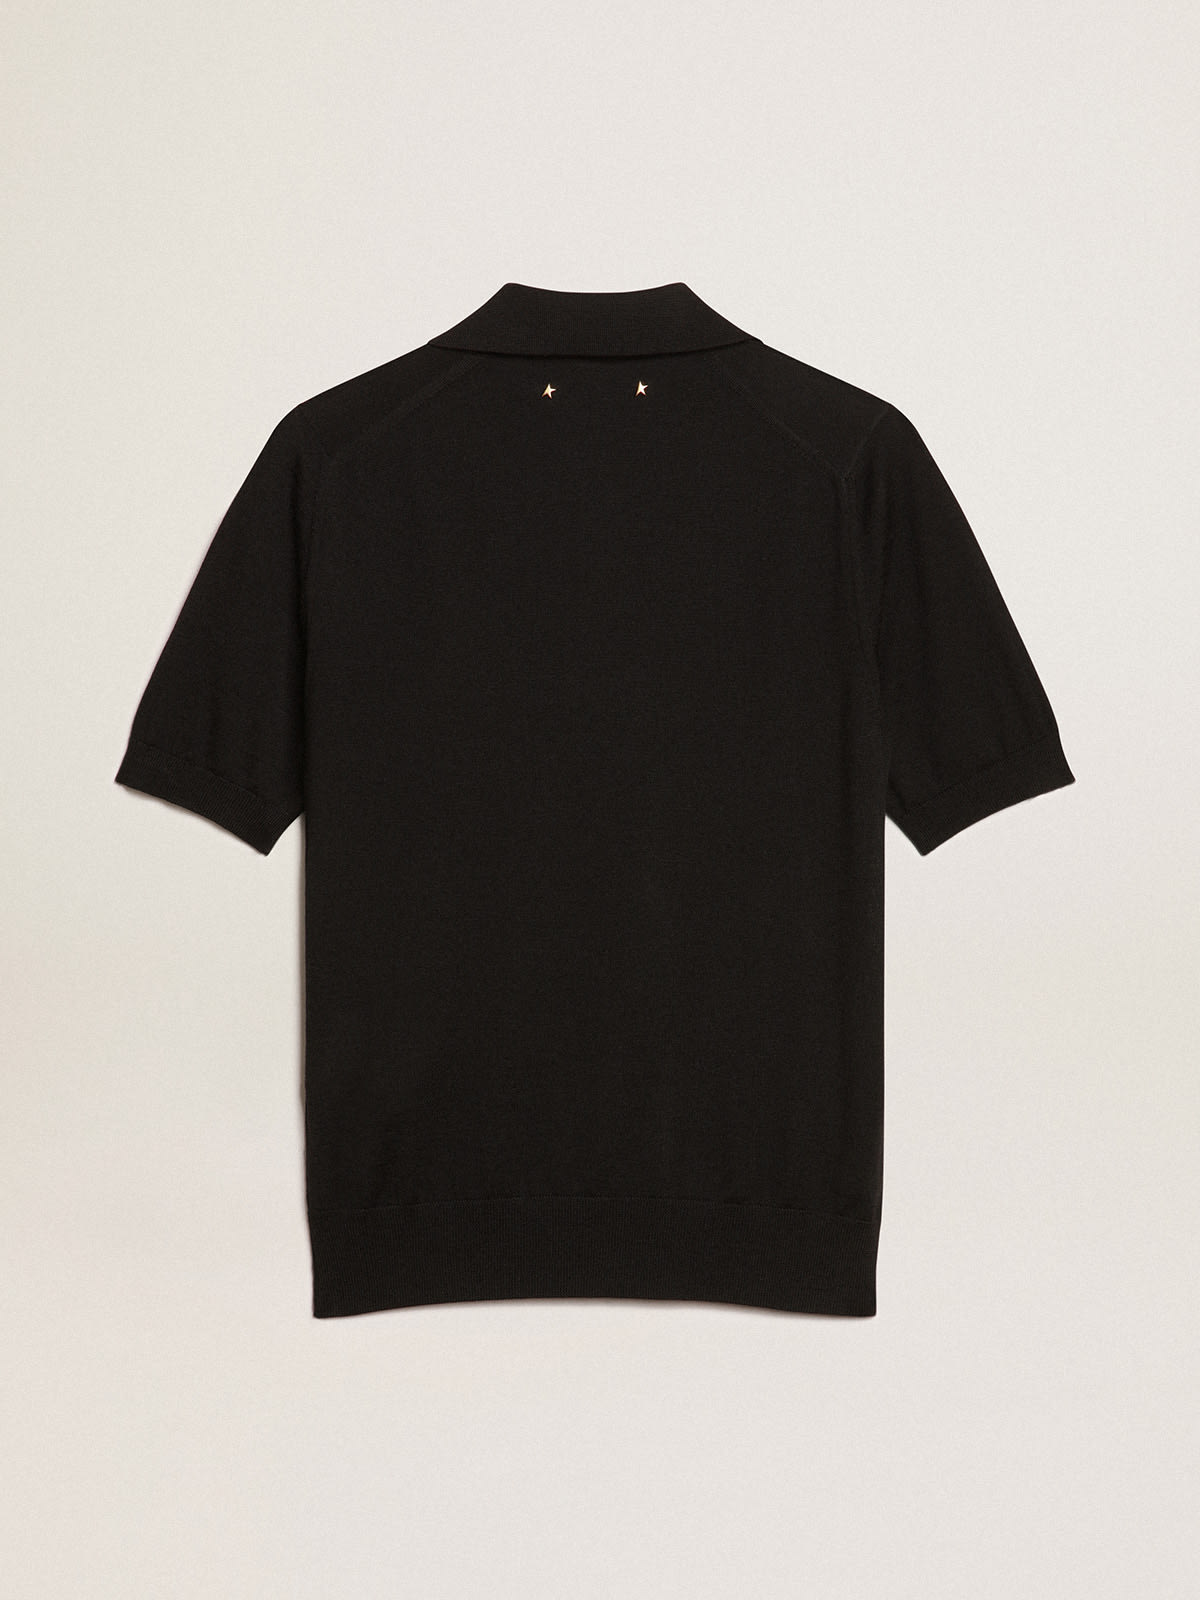 Golden Goose - Women’s polo shirt in black merino wool in 